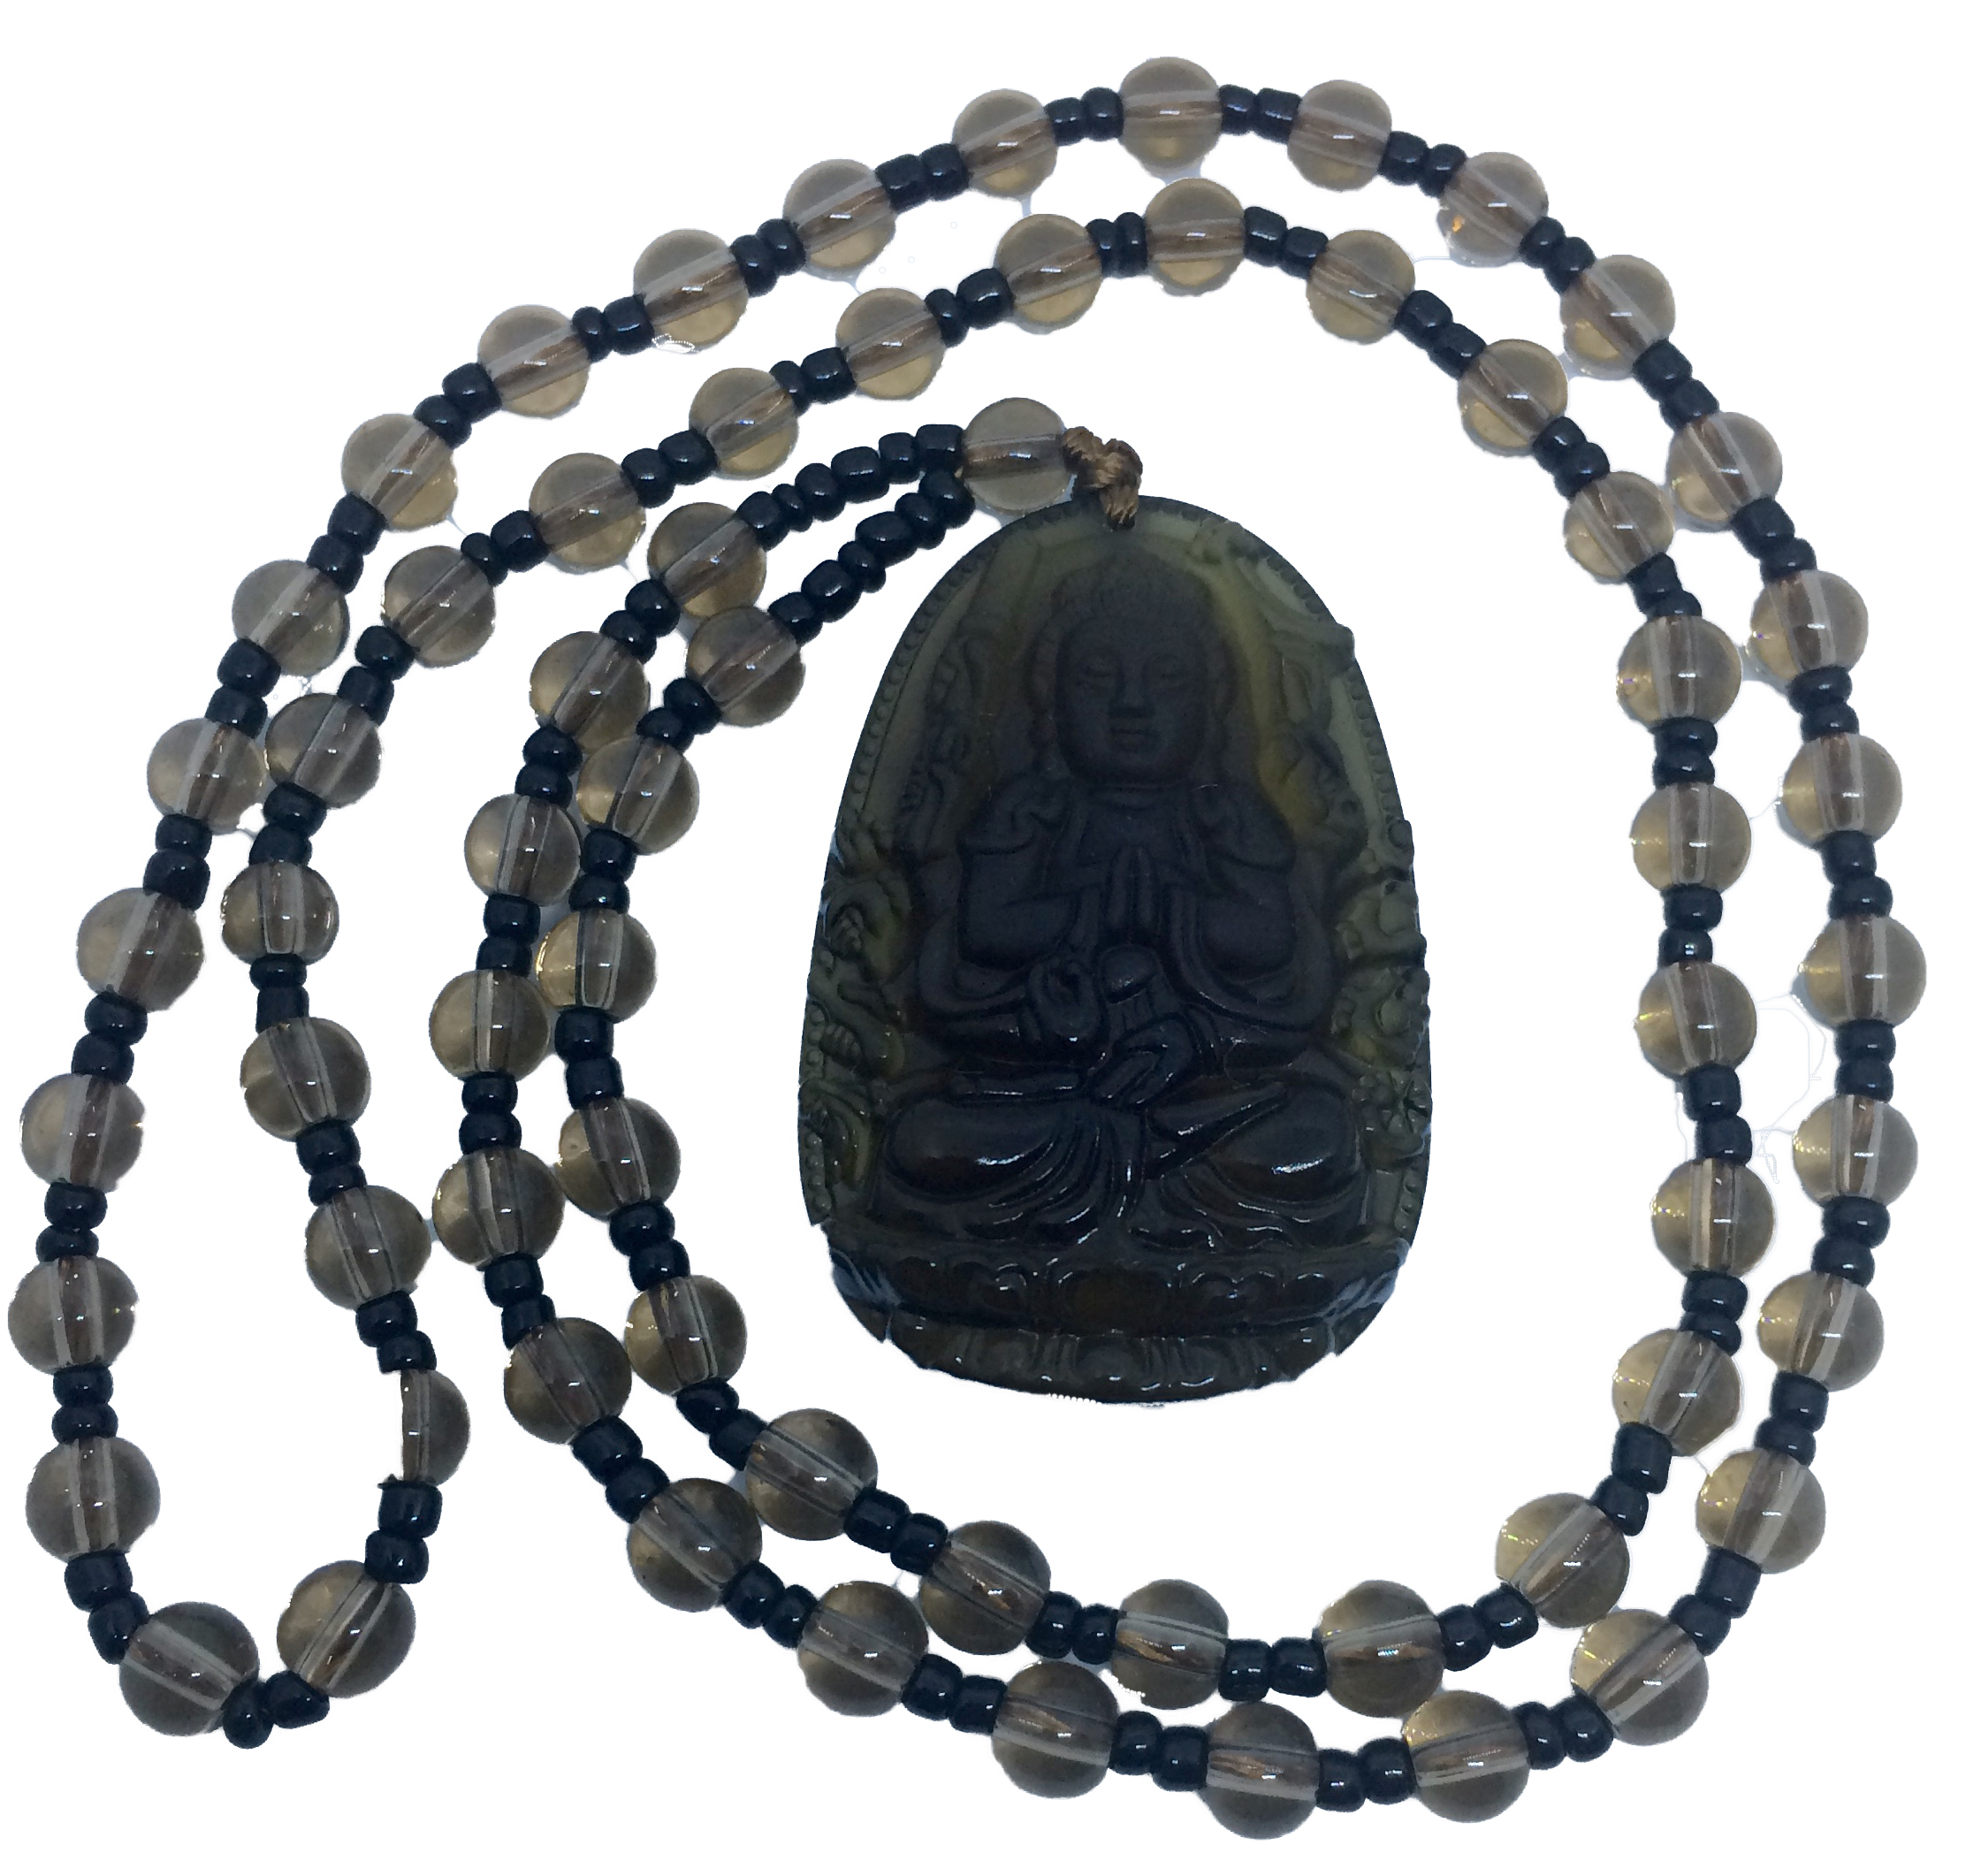 1.obsidienne-Amulette-pendentif-manjushri-bouddha-memoire-intelligeance-efficace-examens-copie